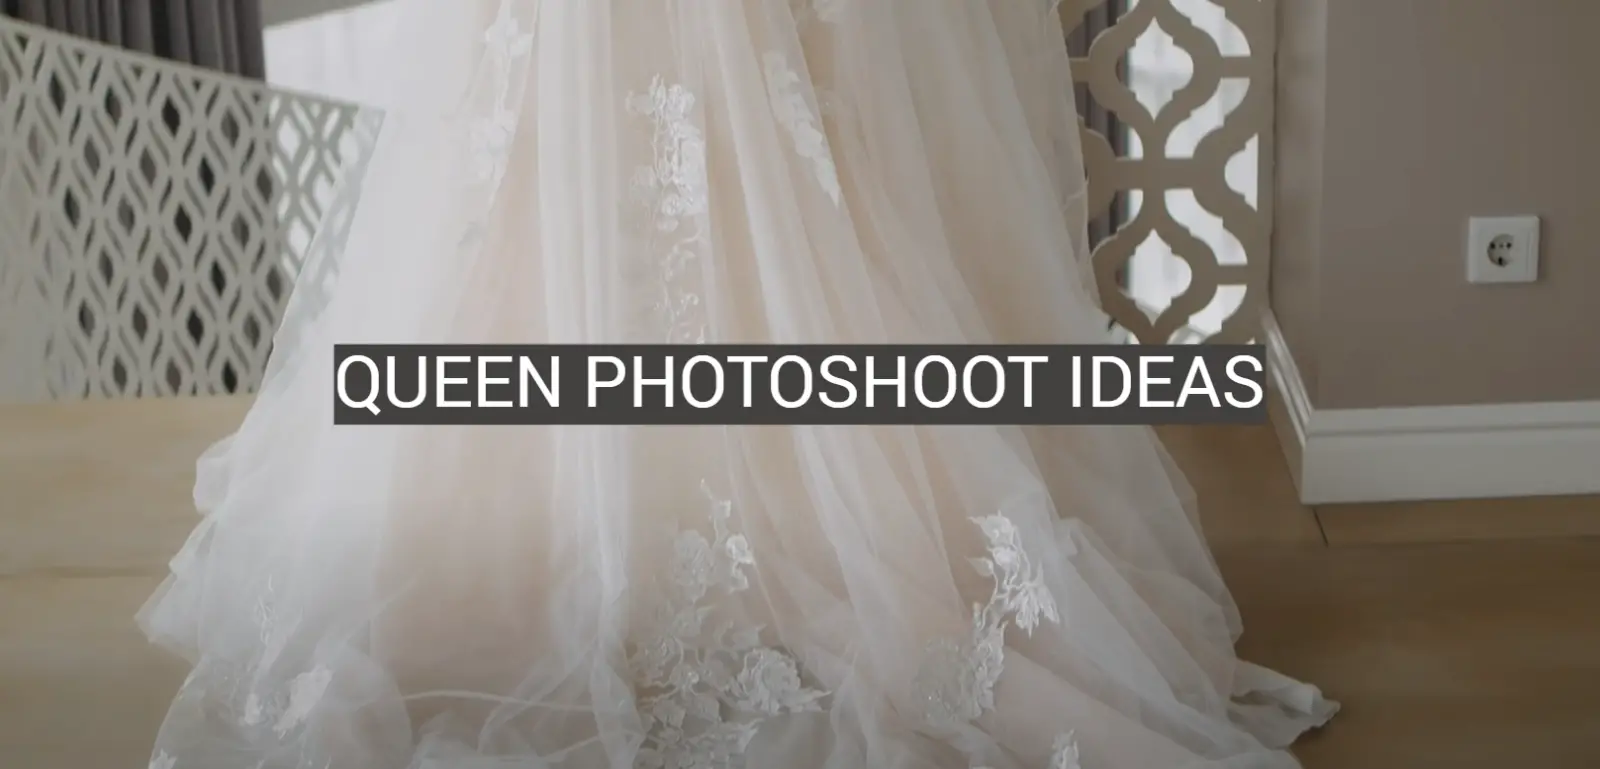 Queen Photoshoot Ideas